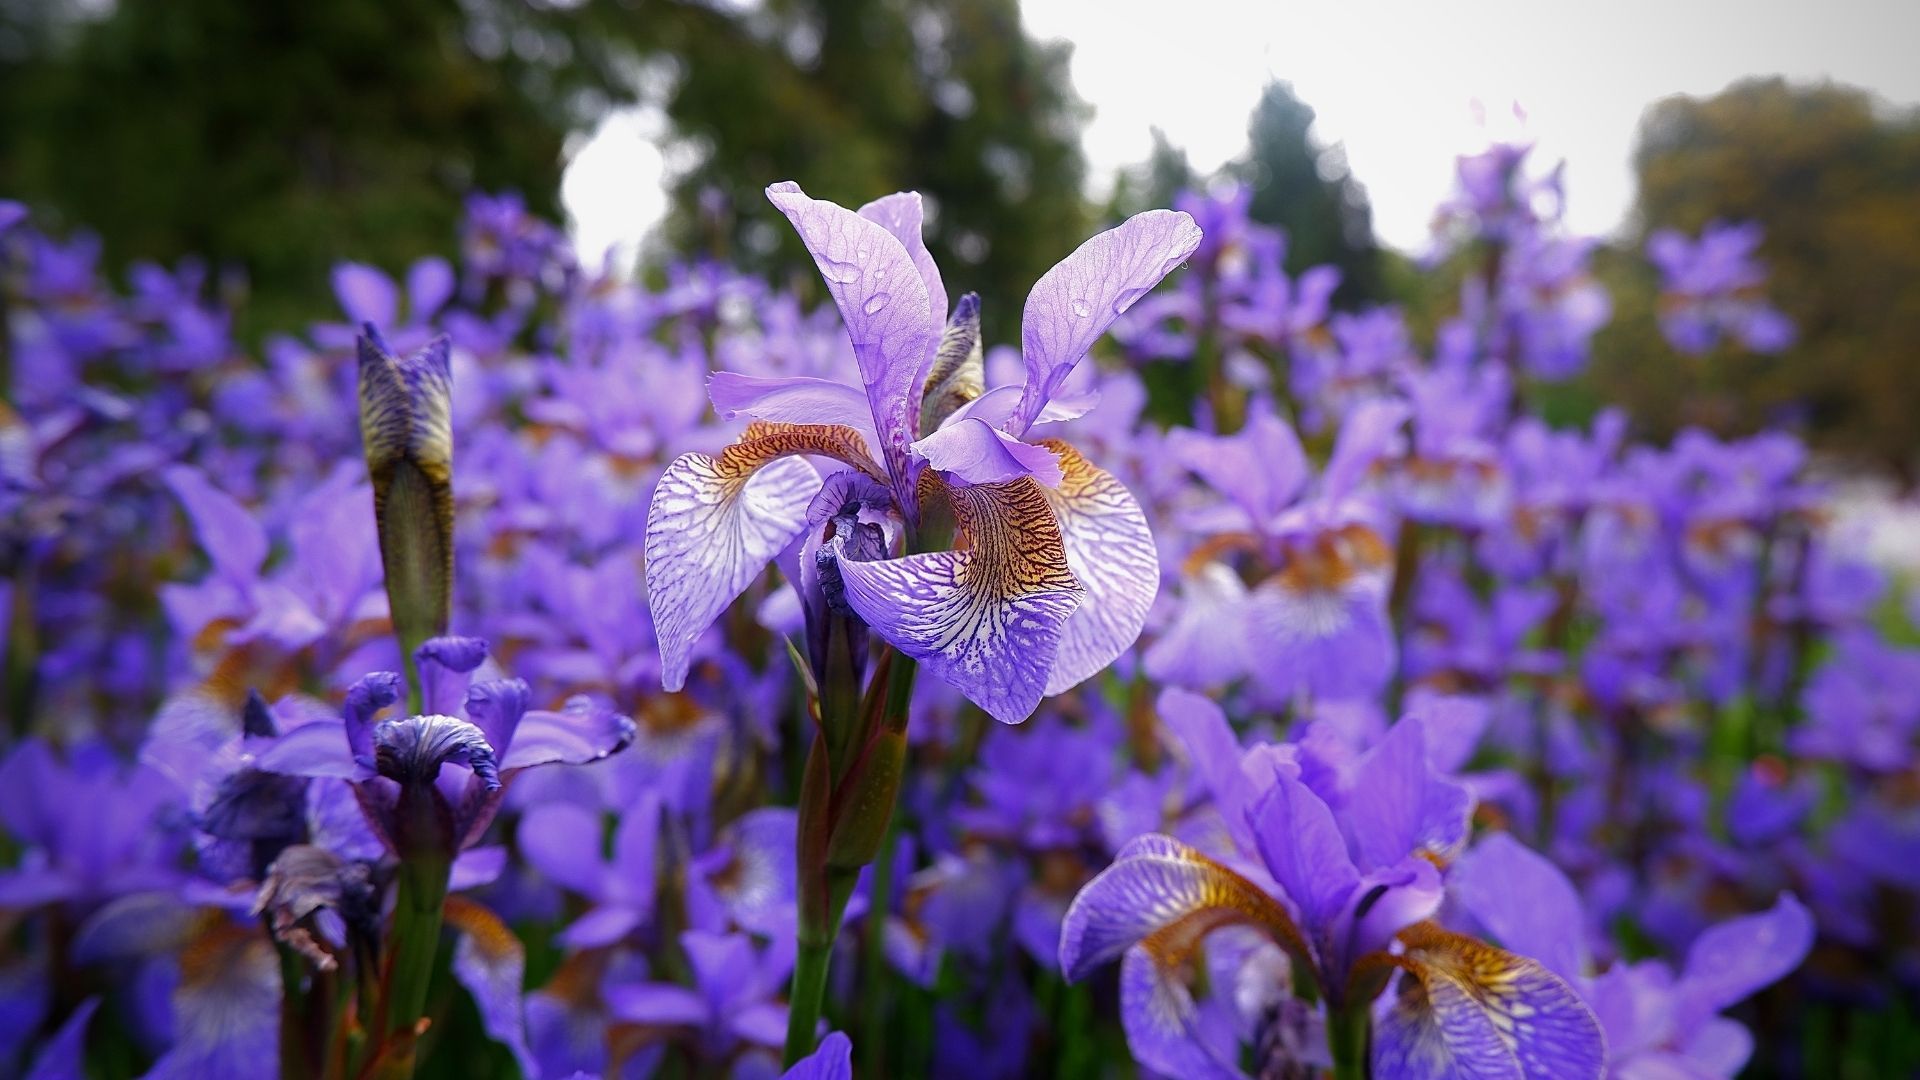 Most beautiful flowers: Iris